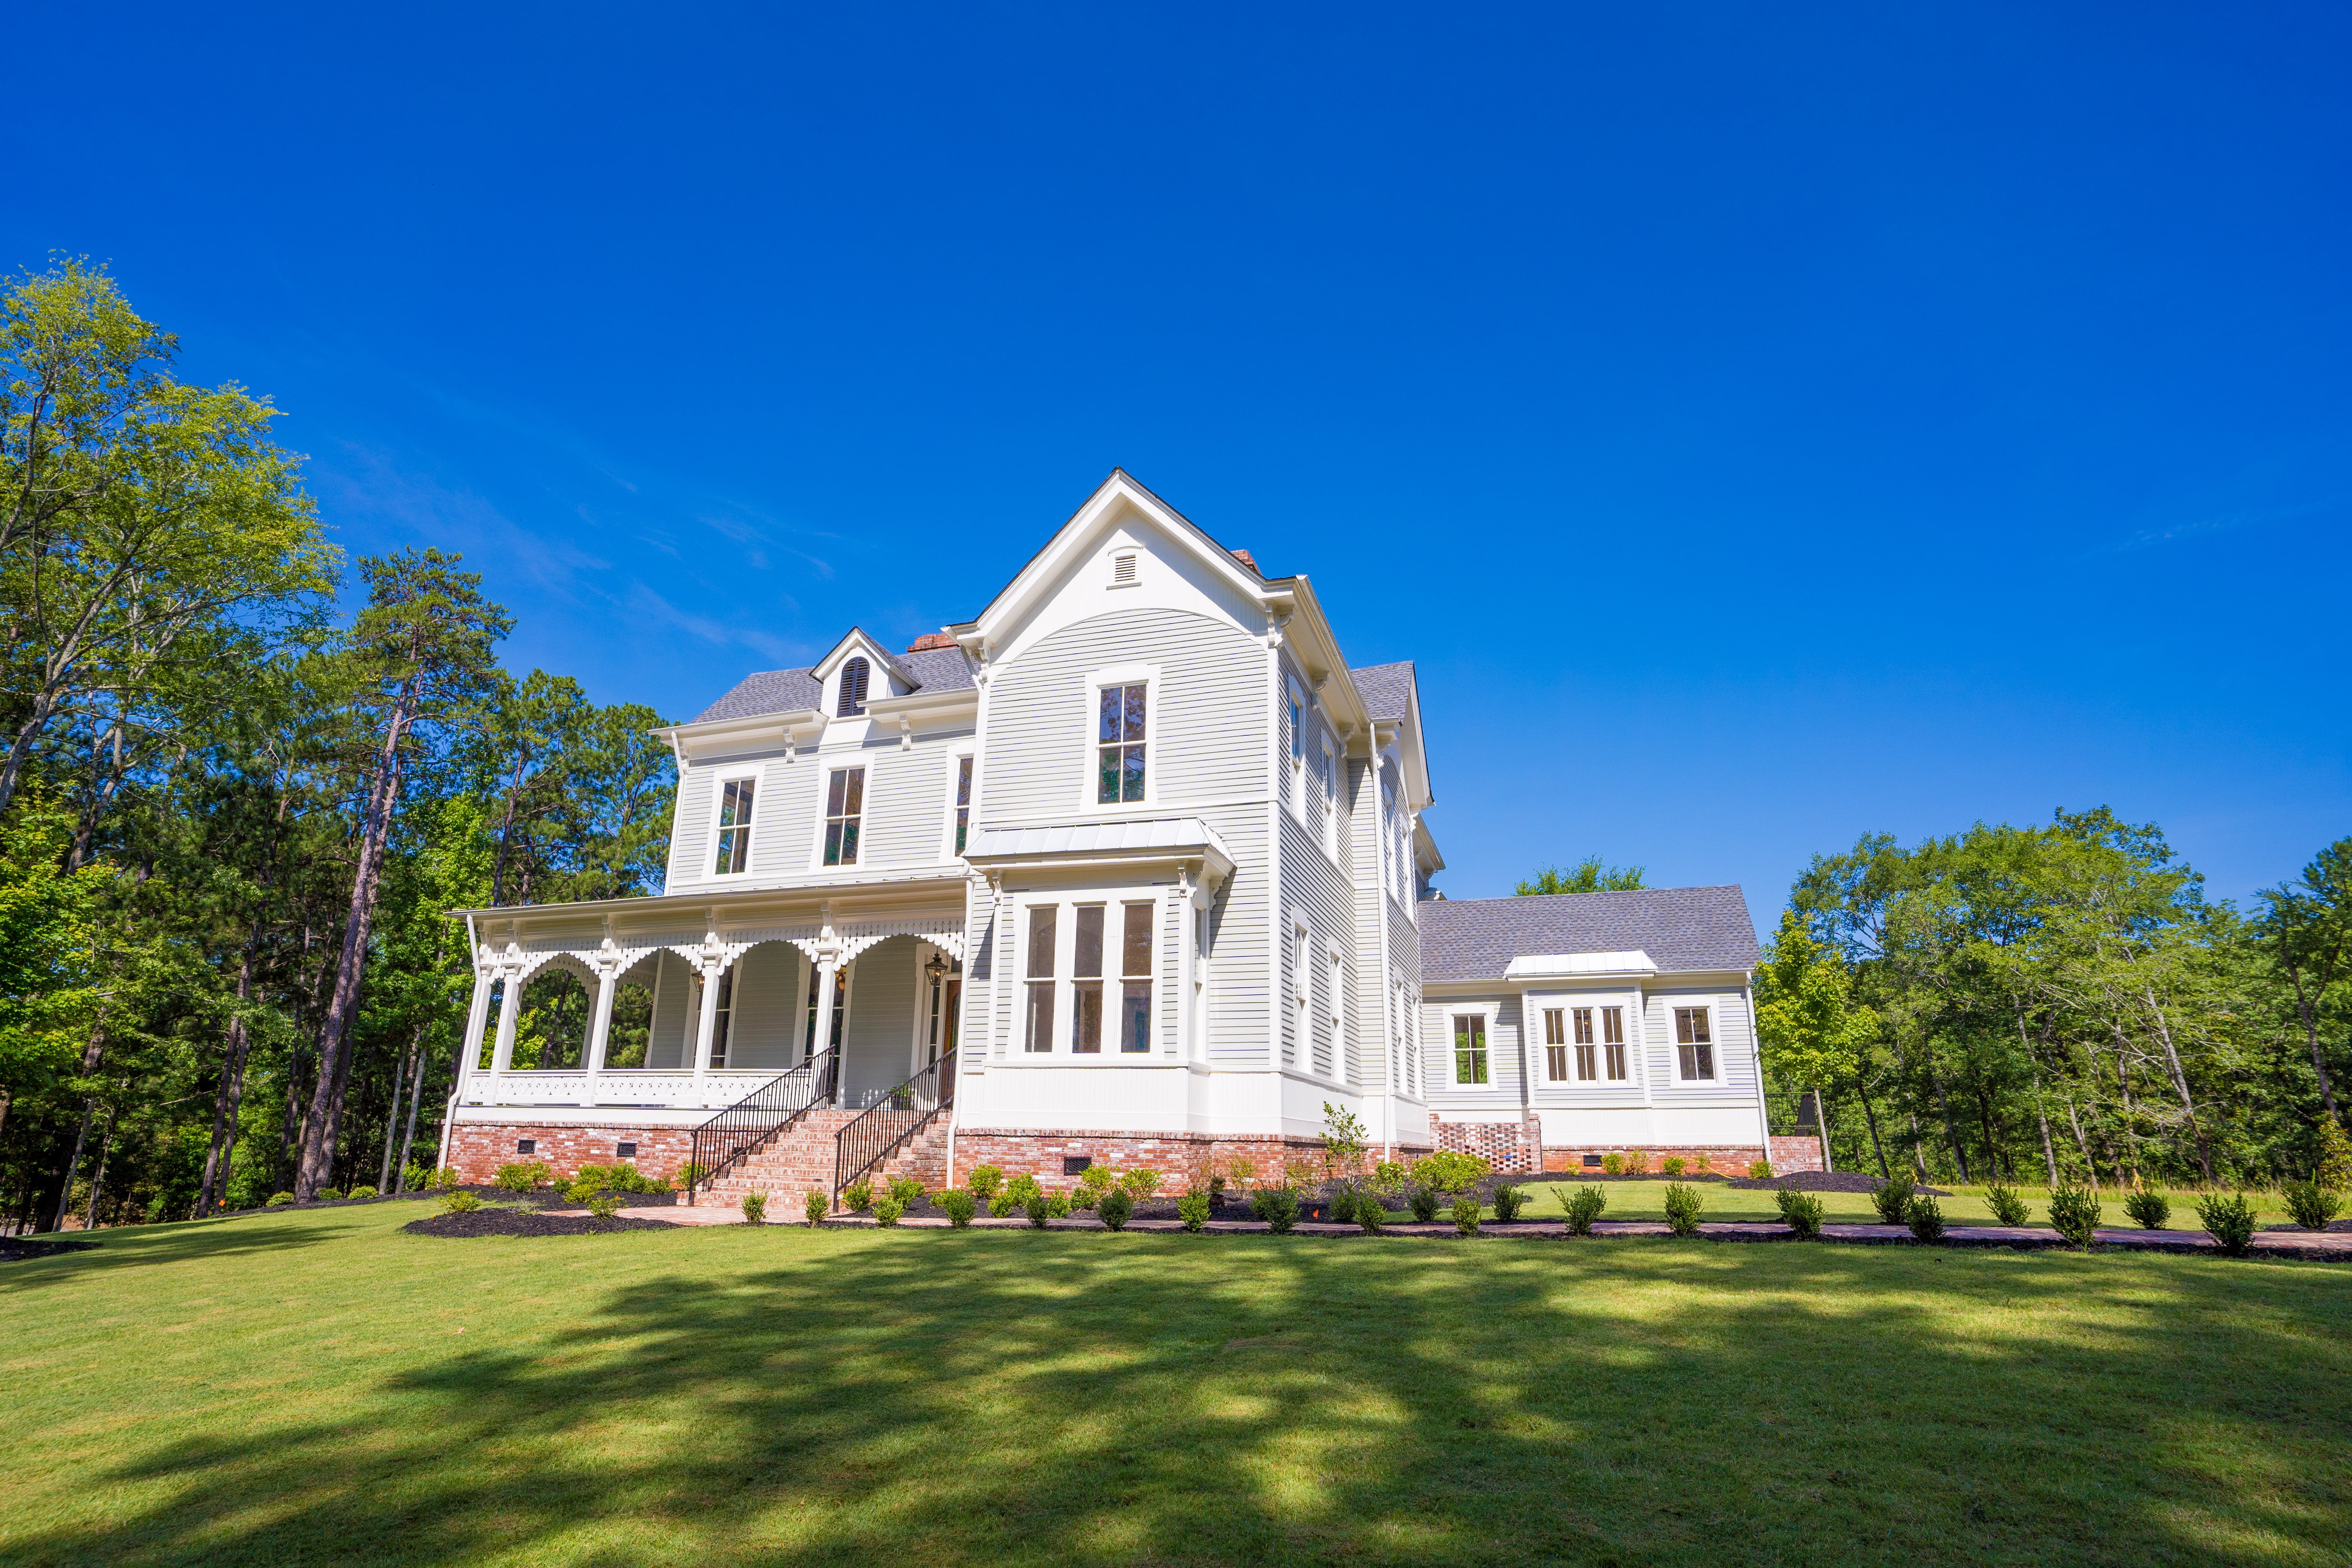 Luxury Lake Oconee Real Estate Group Presents “The Jackson House